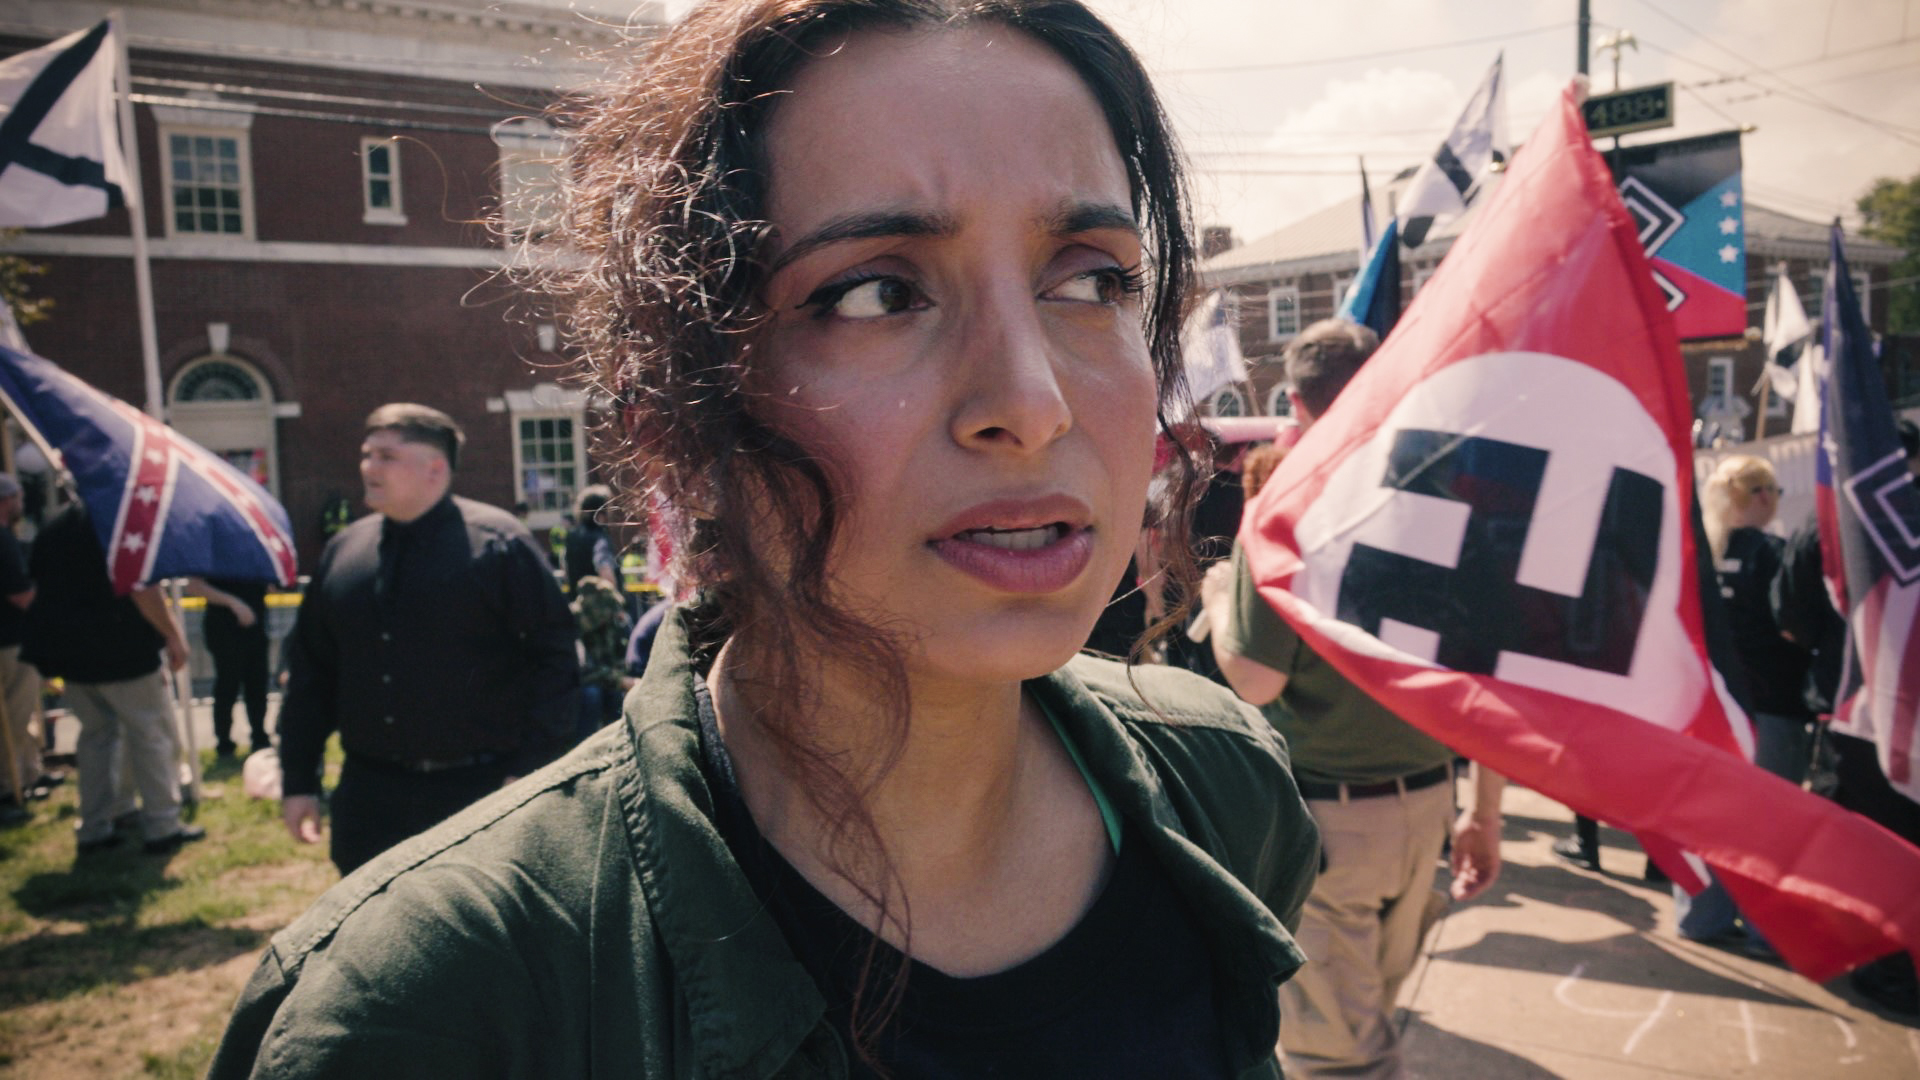 Filmmaker Deeyah Khan at the “Unite the Right” rally in Charlottesville, VA - August 12, 2017.